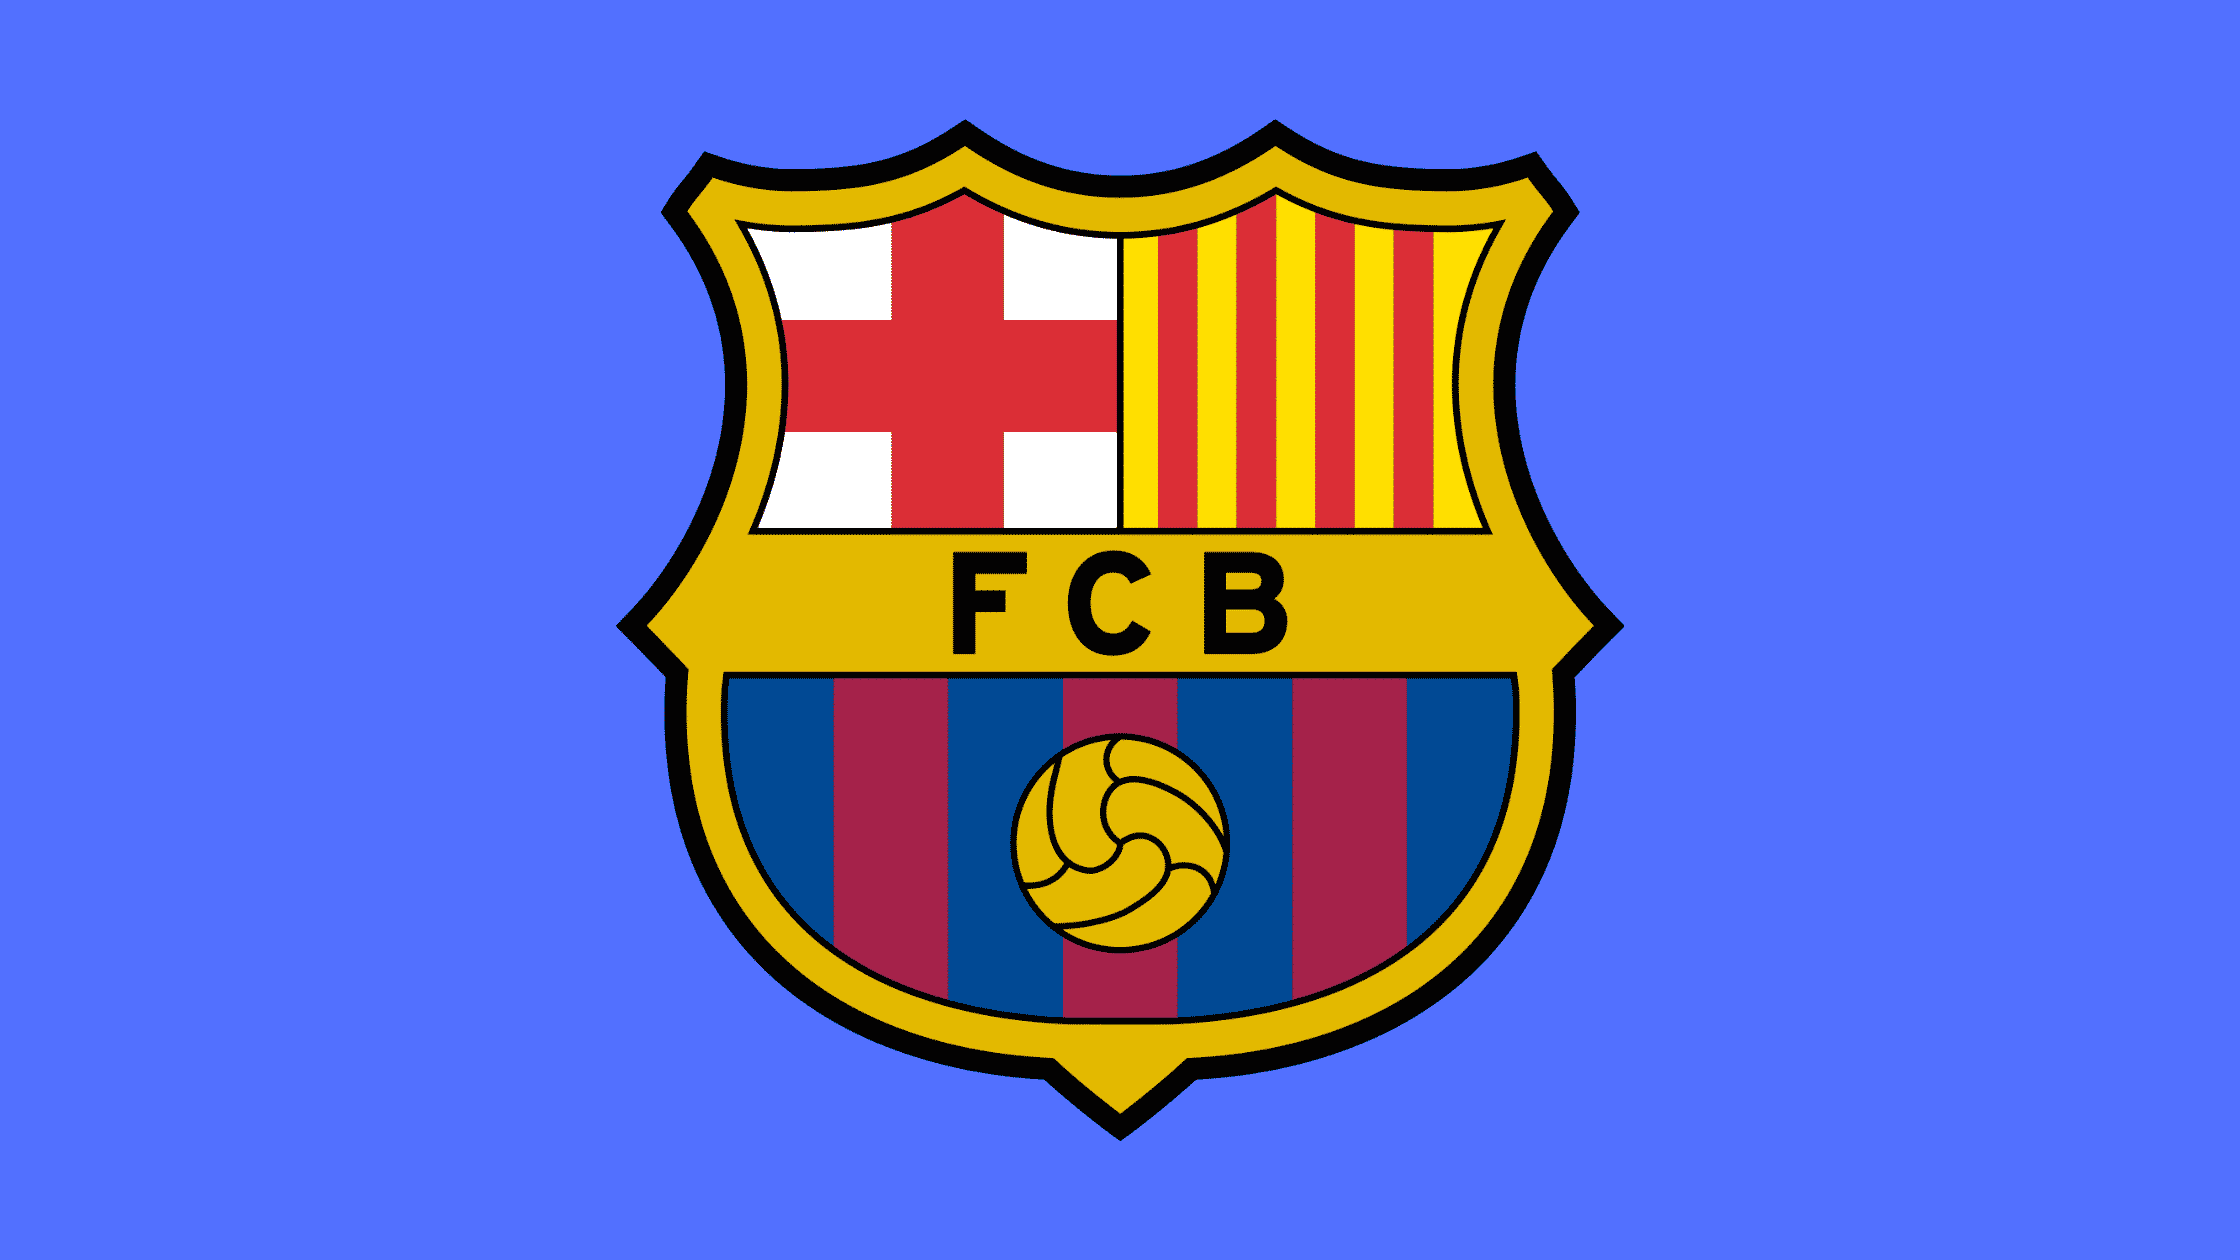 FC Barcelona, Barca: Spiele, heute, live, TV-Übertragung, Live-Stream, Stream, Live-Ticker, Ticker Sky, DAZN, Lionel Messi, Champions League, LaLiga / La Liga.